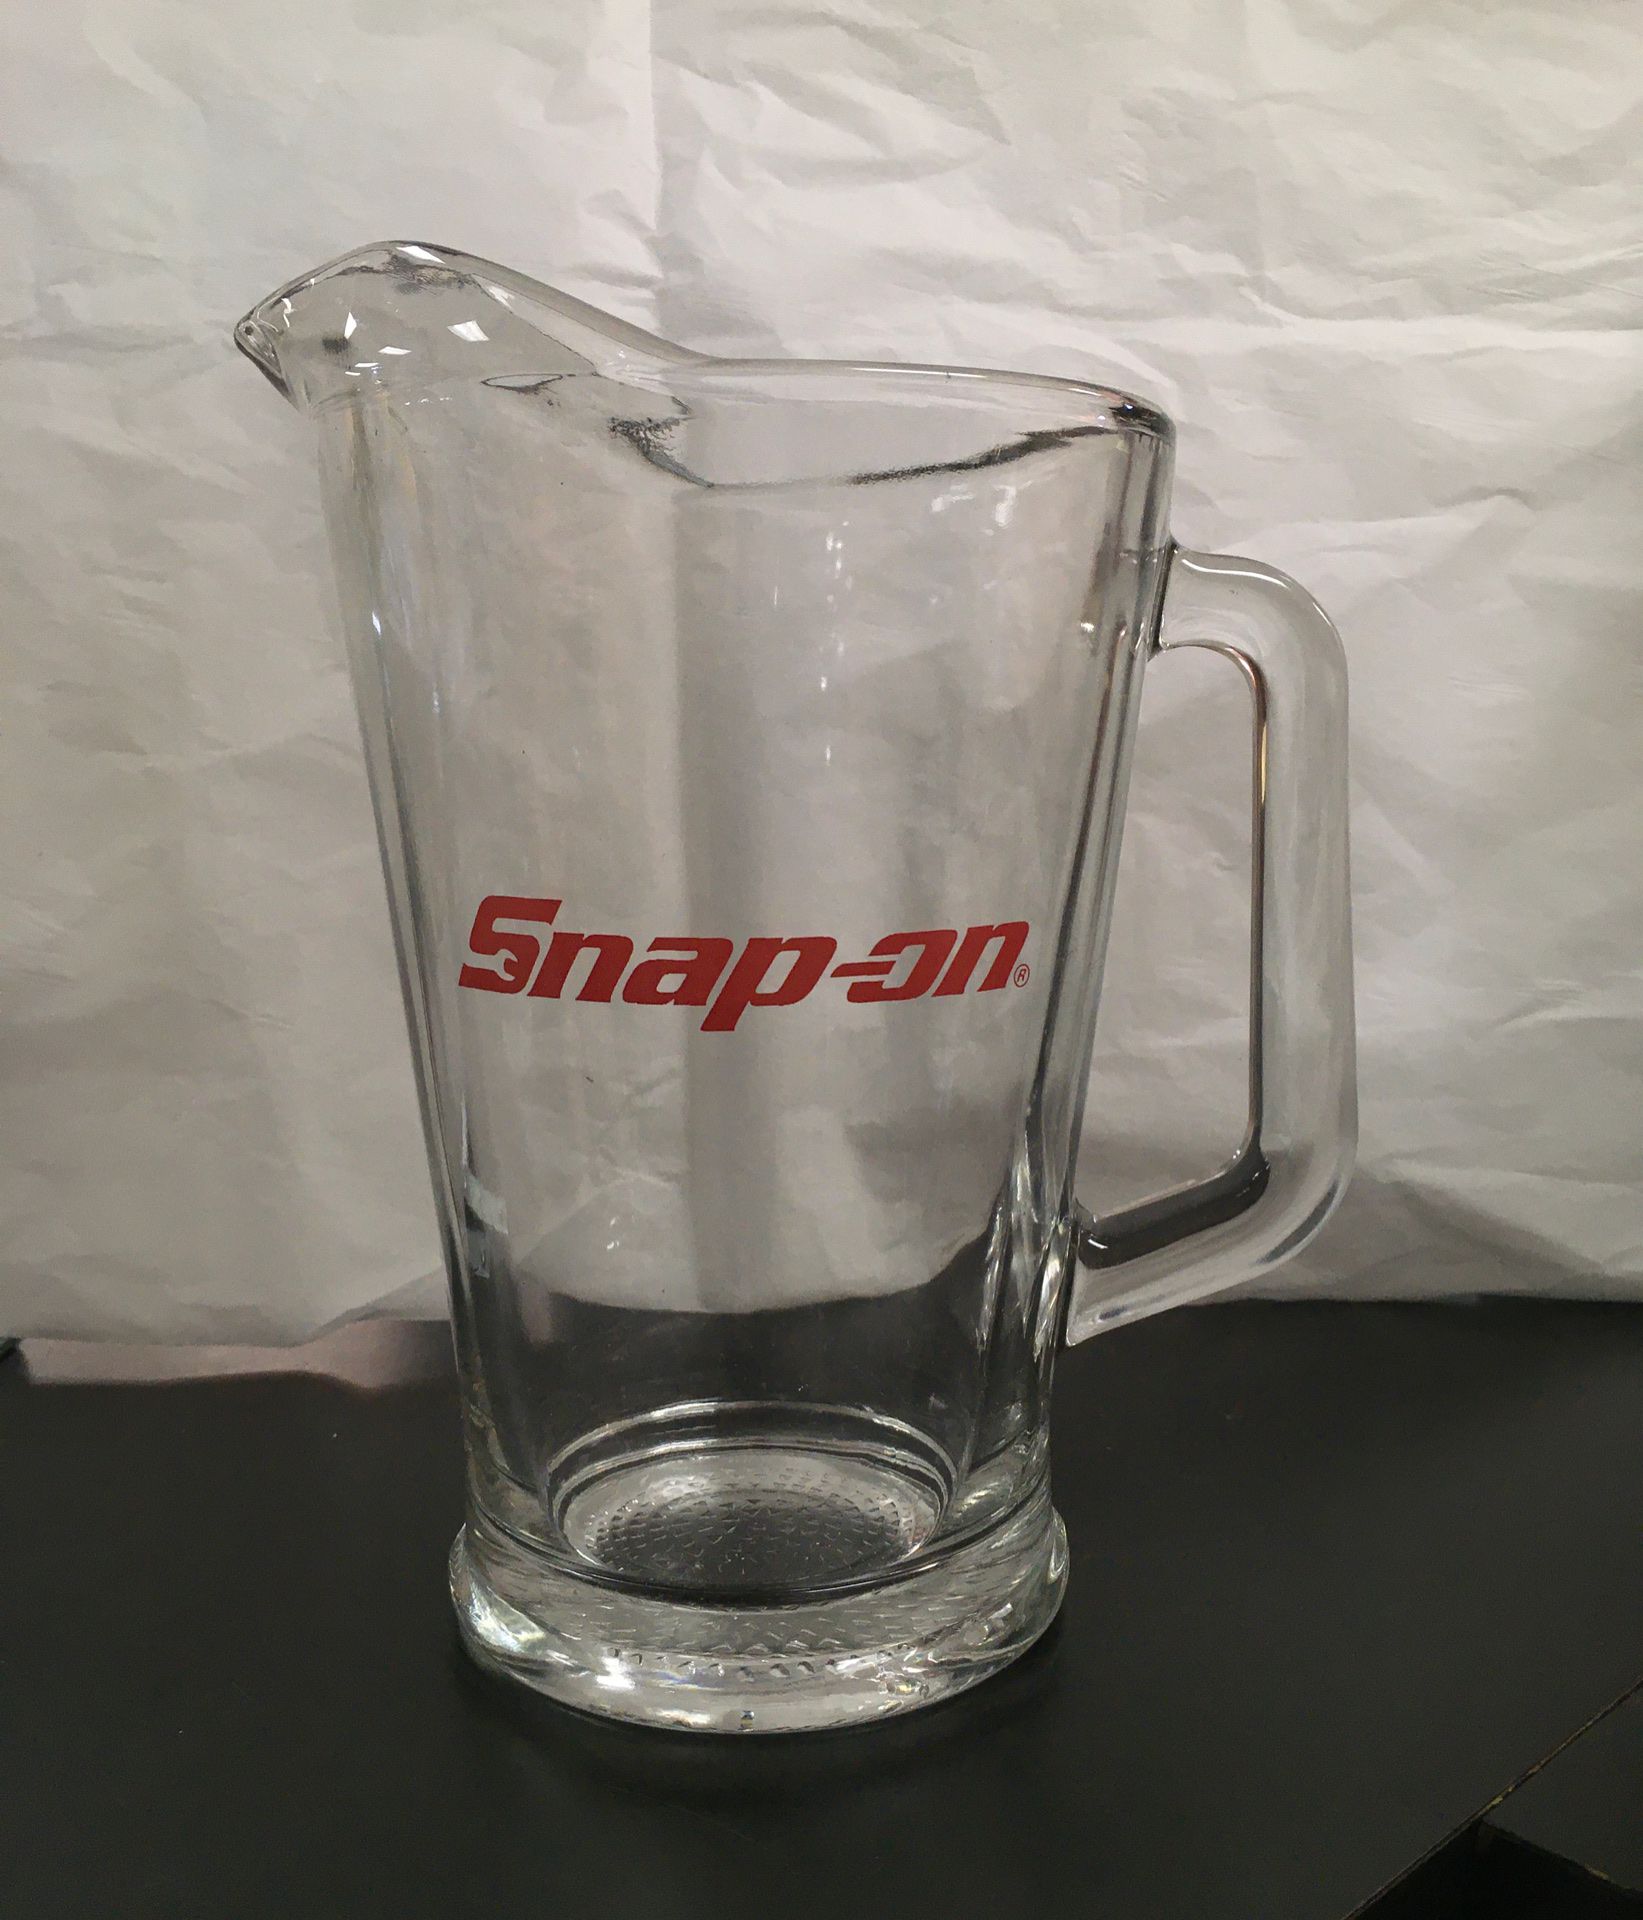 Snap-on glassware